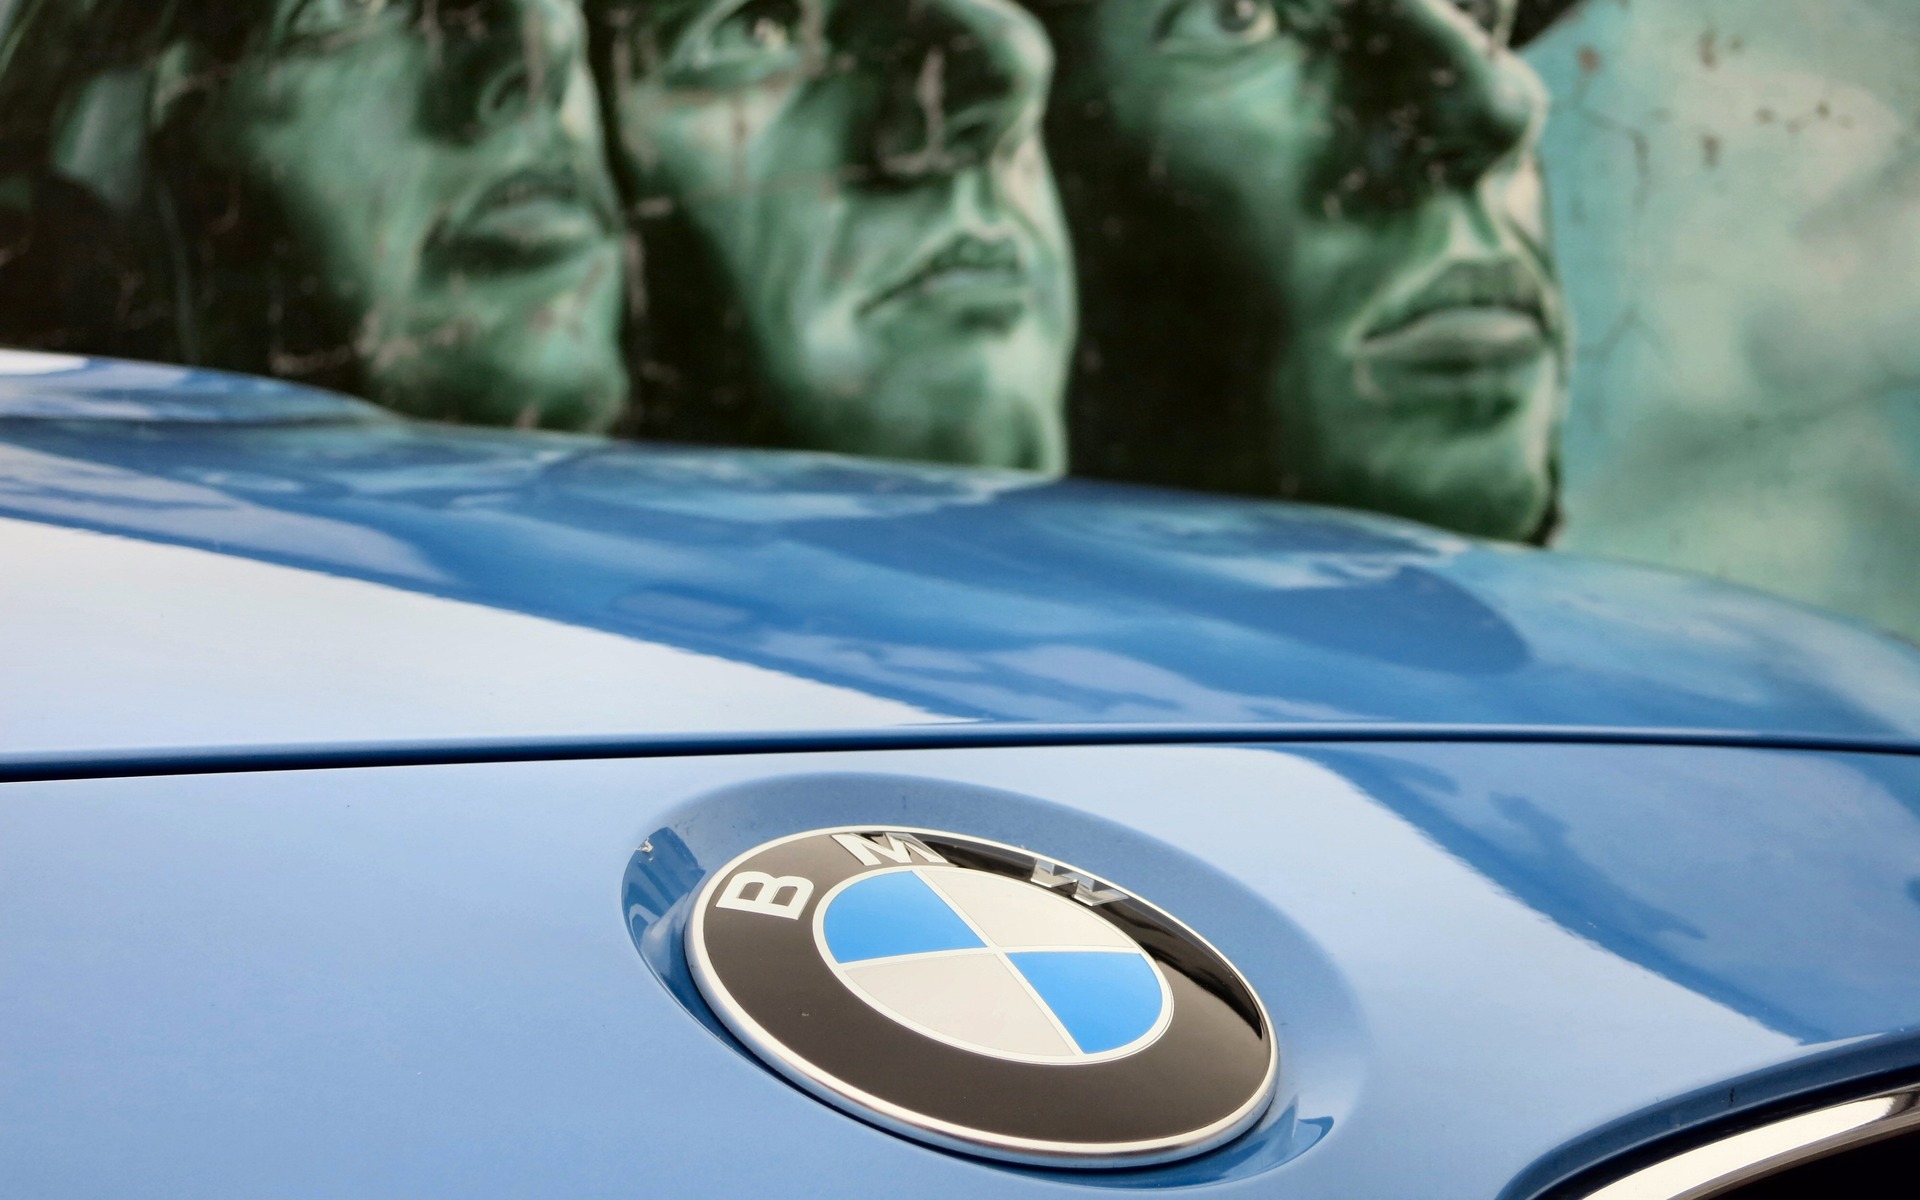 The BMW M3's unique blue paint was a real eye-catcher.